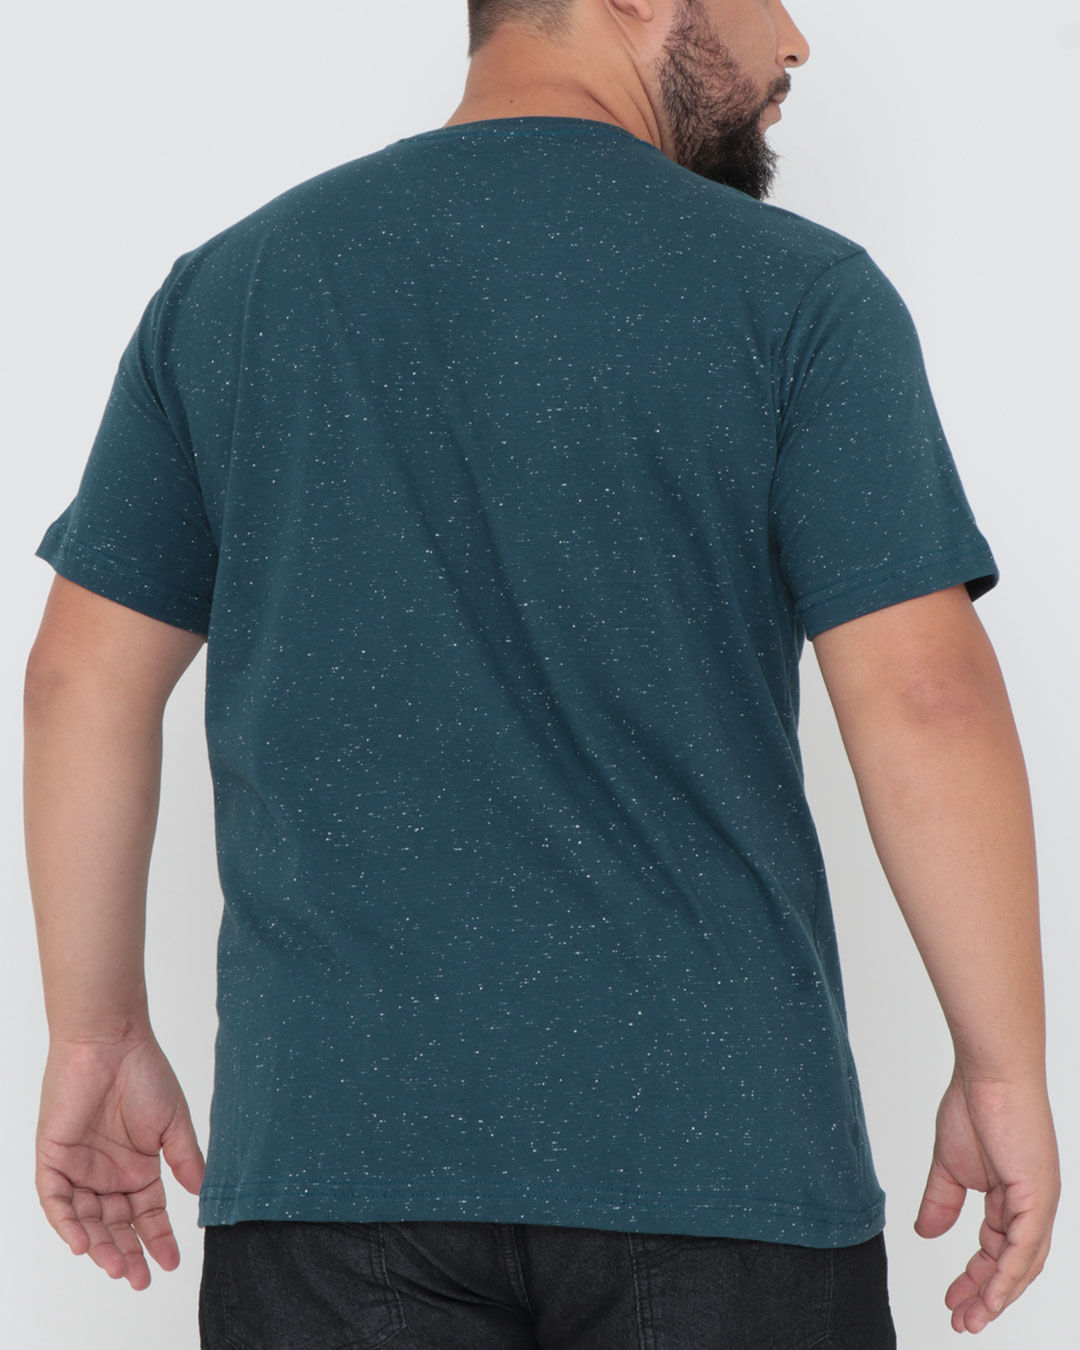 Camiseta-Botone-Petroleo-G1g4---Verde-Escuro